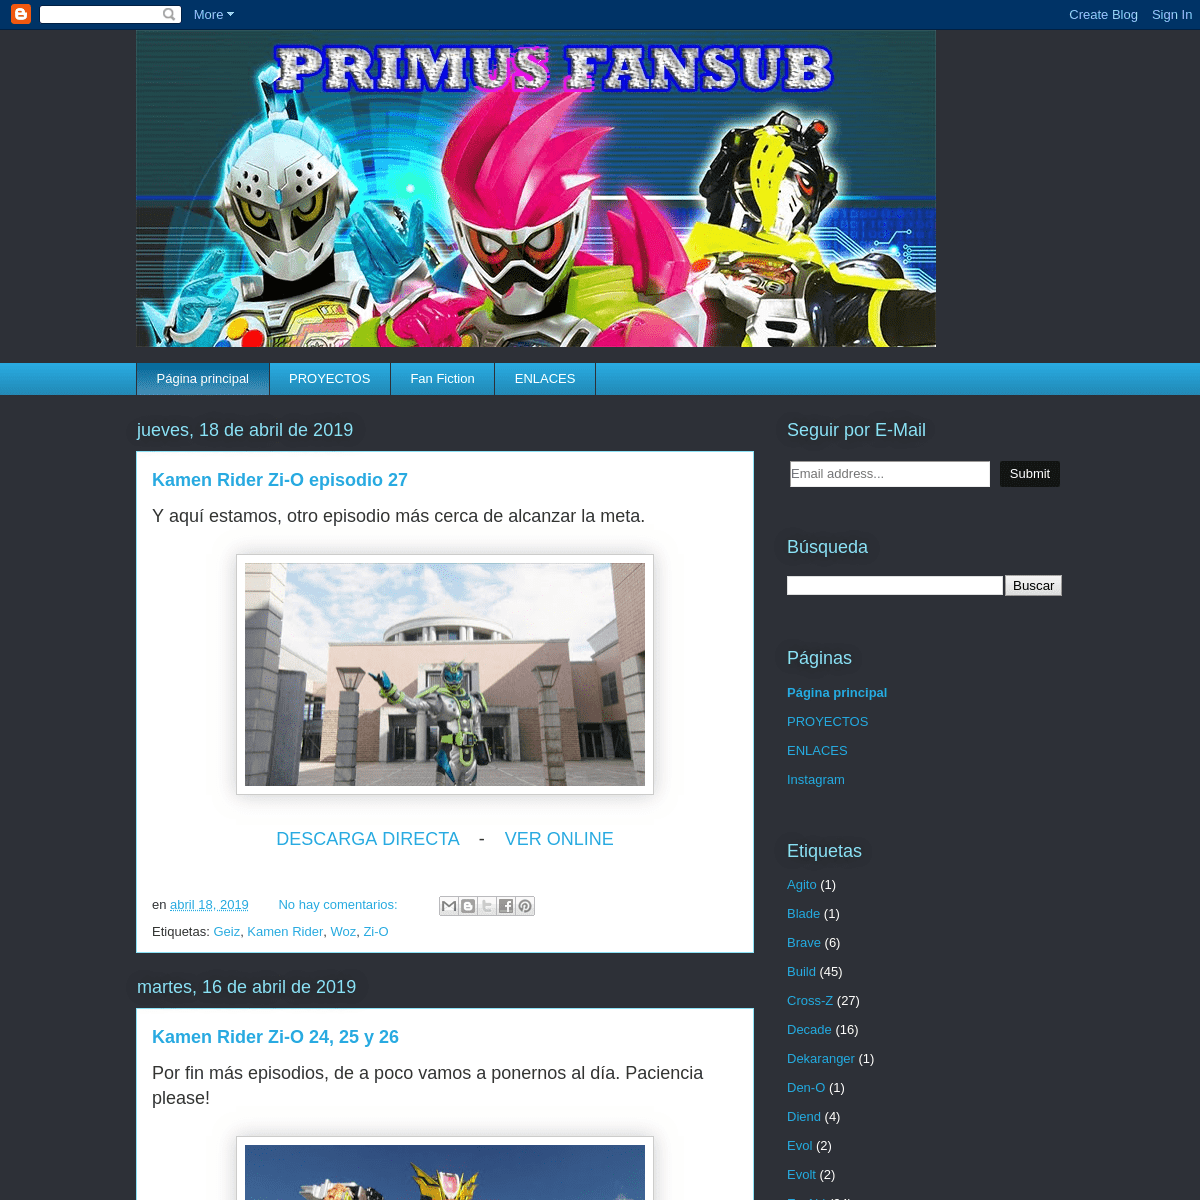 A complete backup of primusfansub.blogspot.com